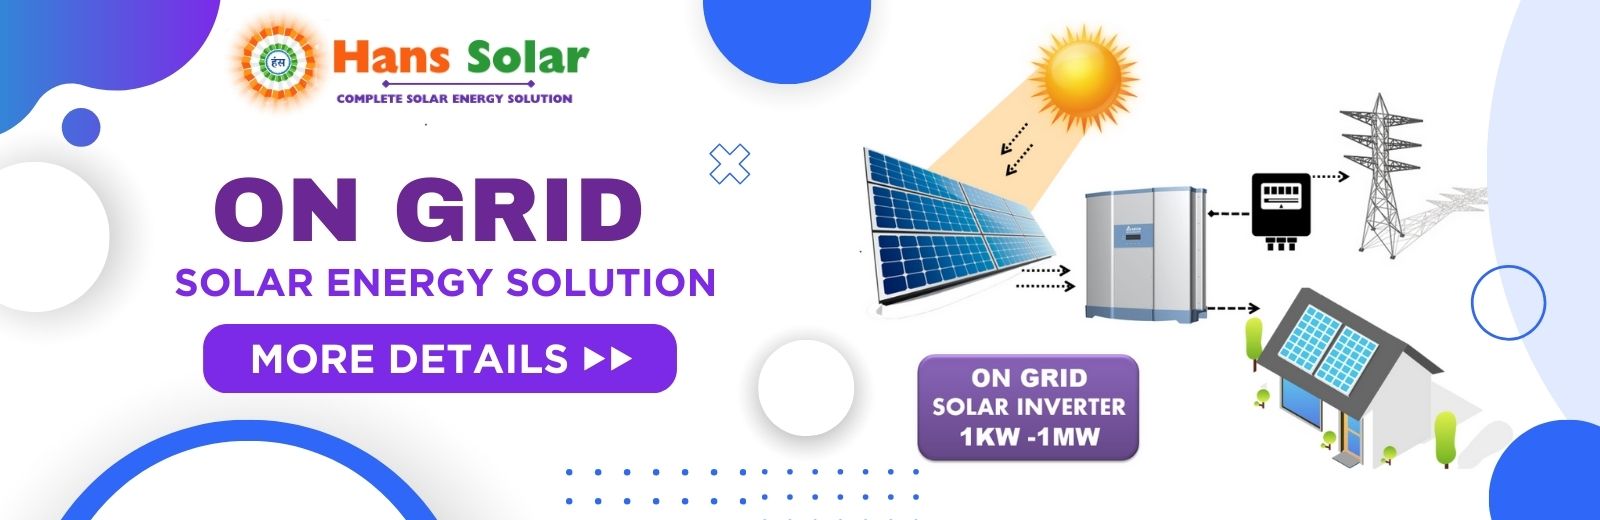 ON GRID SOLAR ENERGY SOLUTION